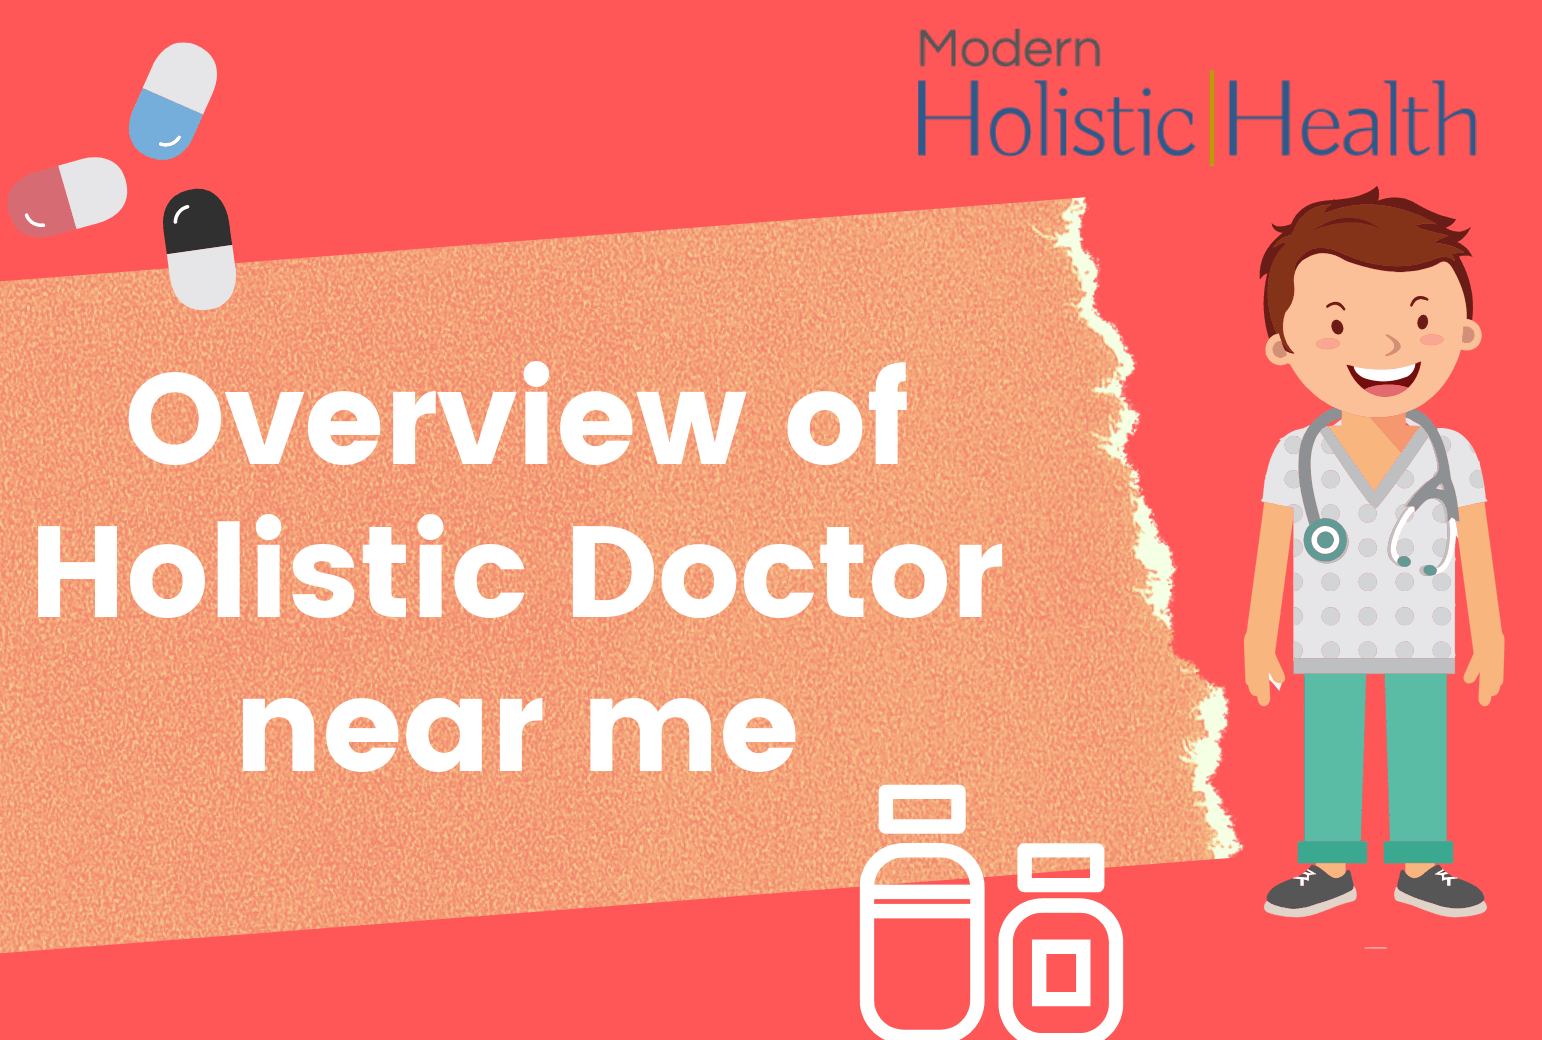 Overview of Holistic Doctor near me | Modern Holistic Health